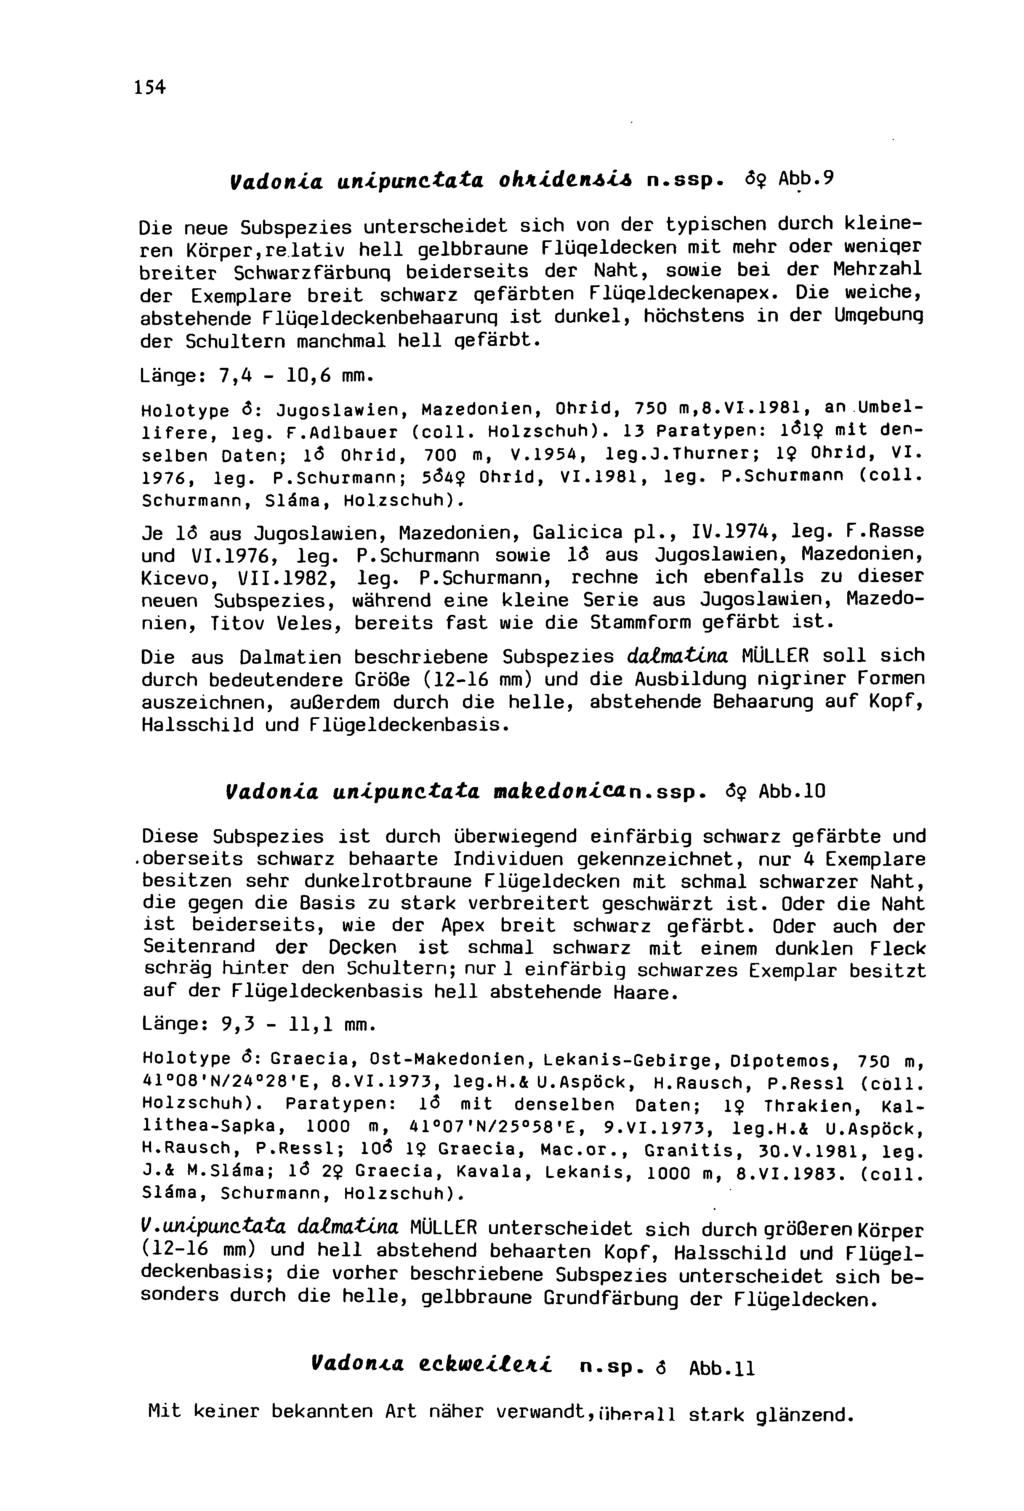 154 Wiener Coleopterologenverein (WCV), download unter www.biologiezentrum.at Vado nia ani.punc.tata ohkidtnòia n.ssp. 6$ Abb.